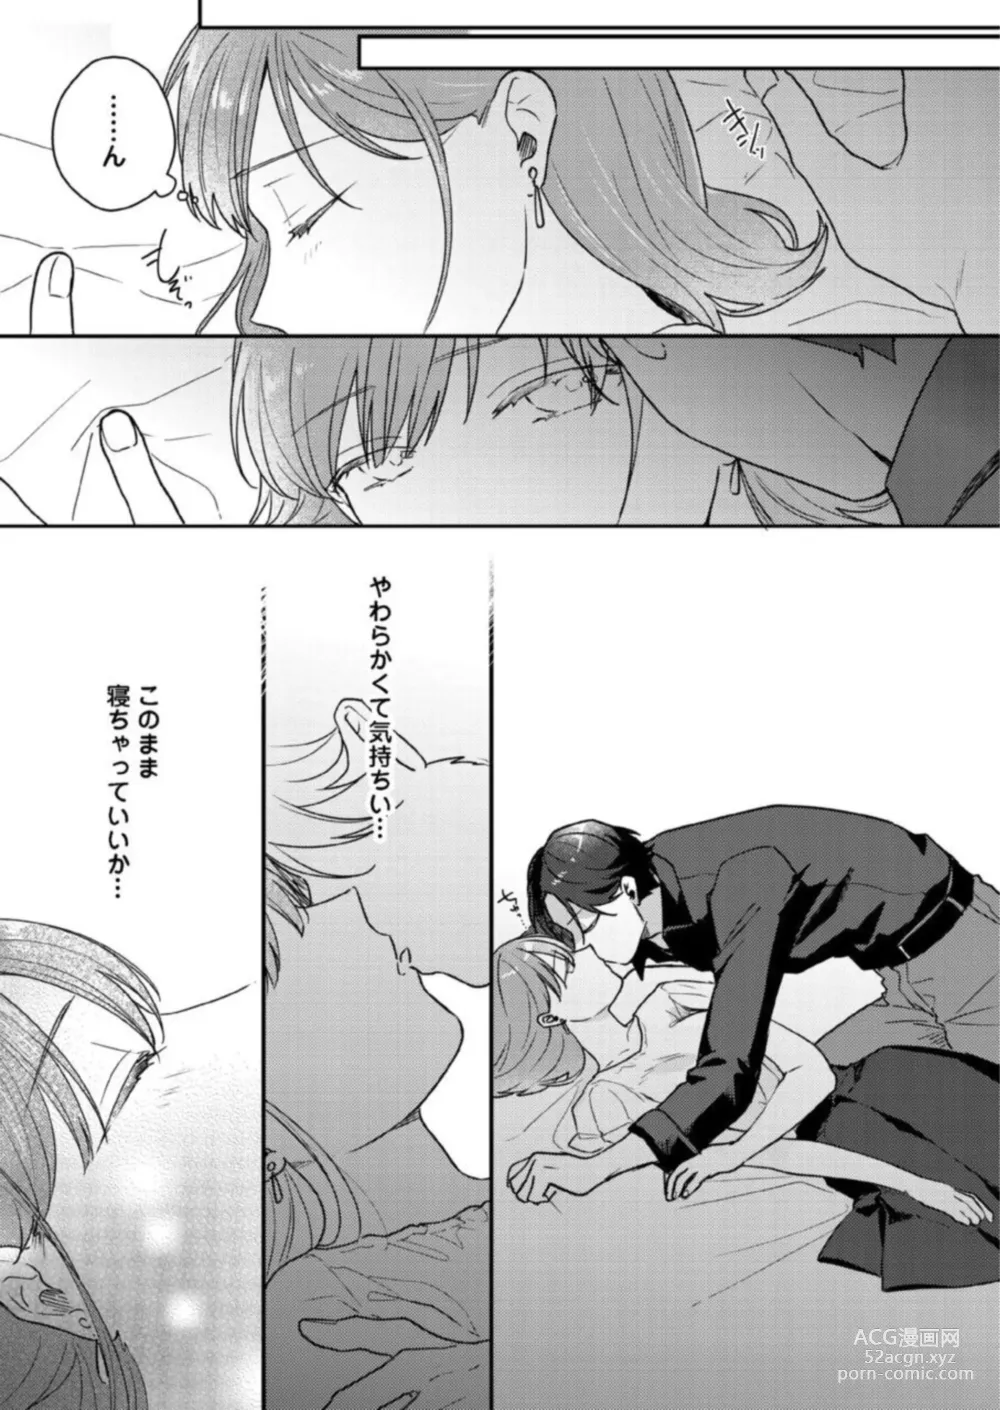 Page 13 of manga Renai Chocola